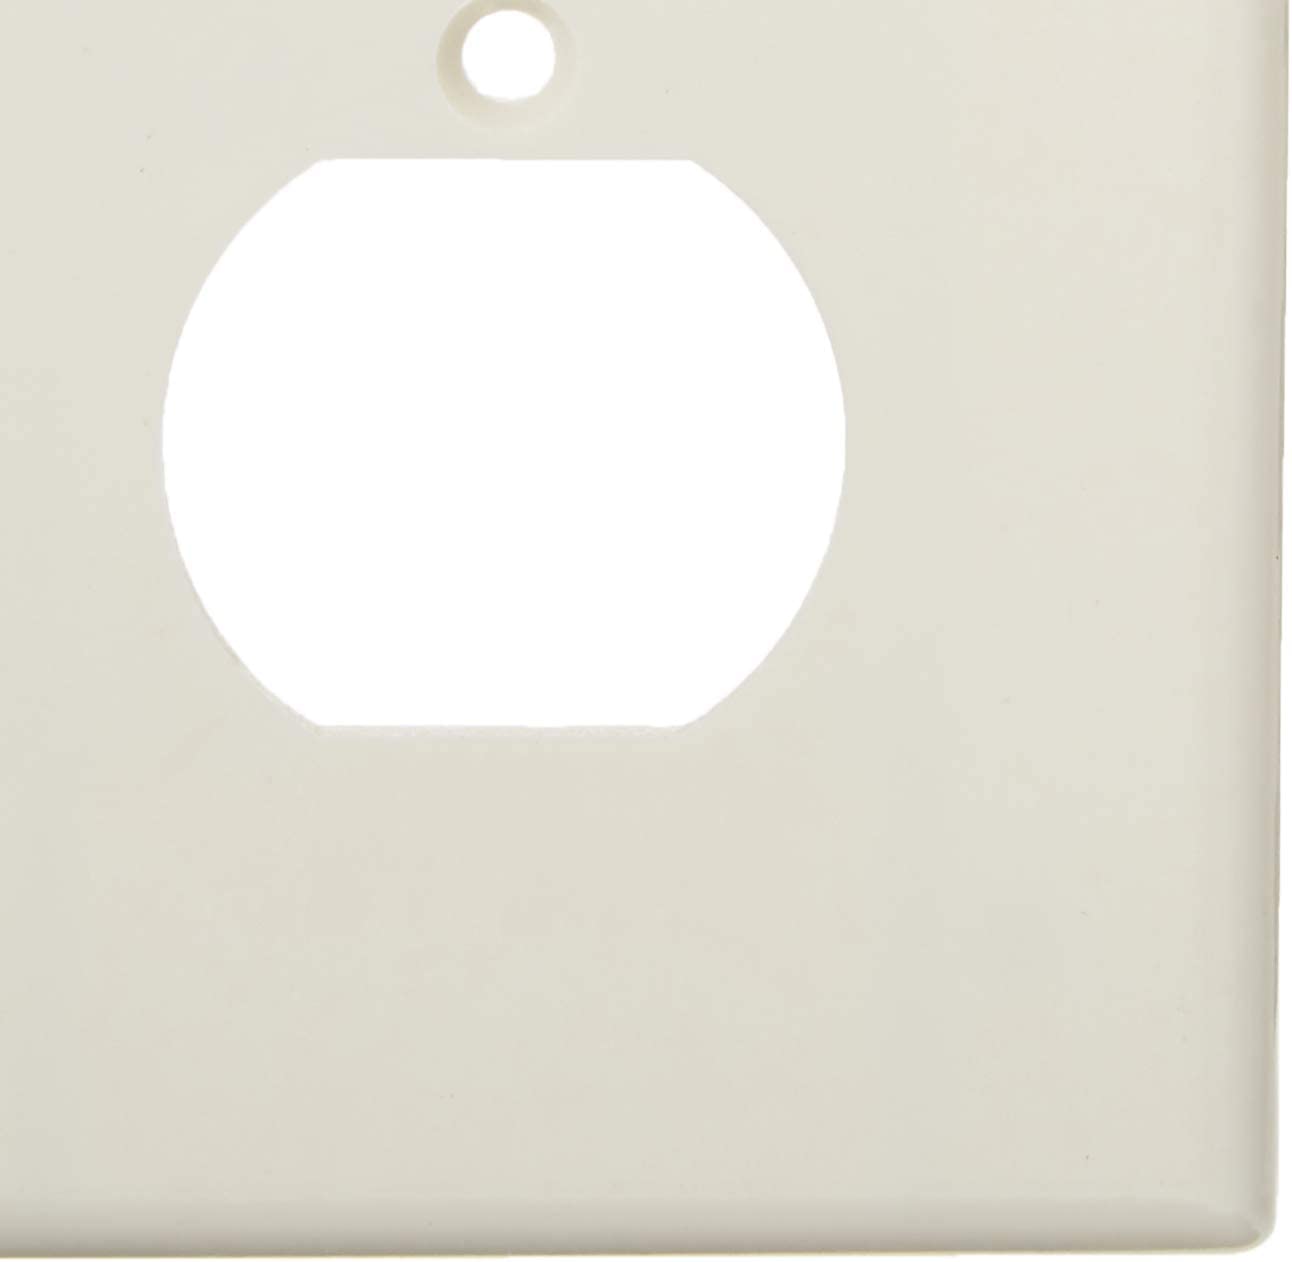 Leviton 80505-W 2-Gang 1-Toggle 1-Duplex Device Combination Wallplate, Midway Size, White